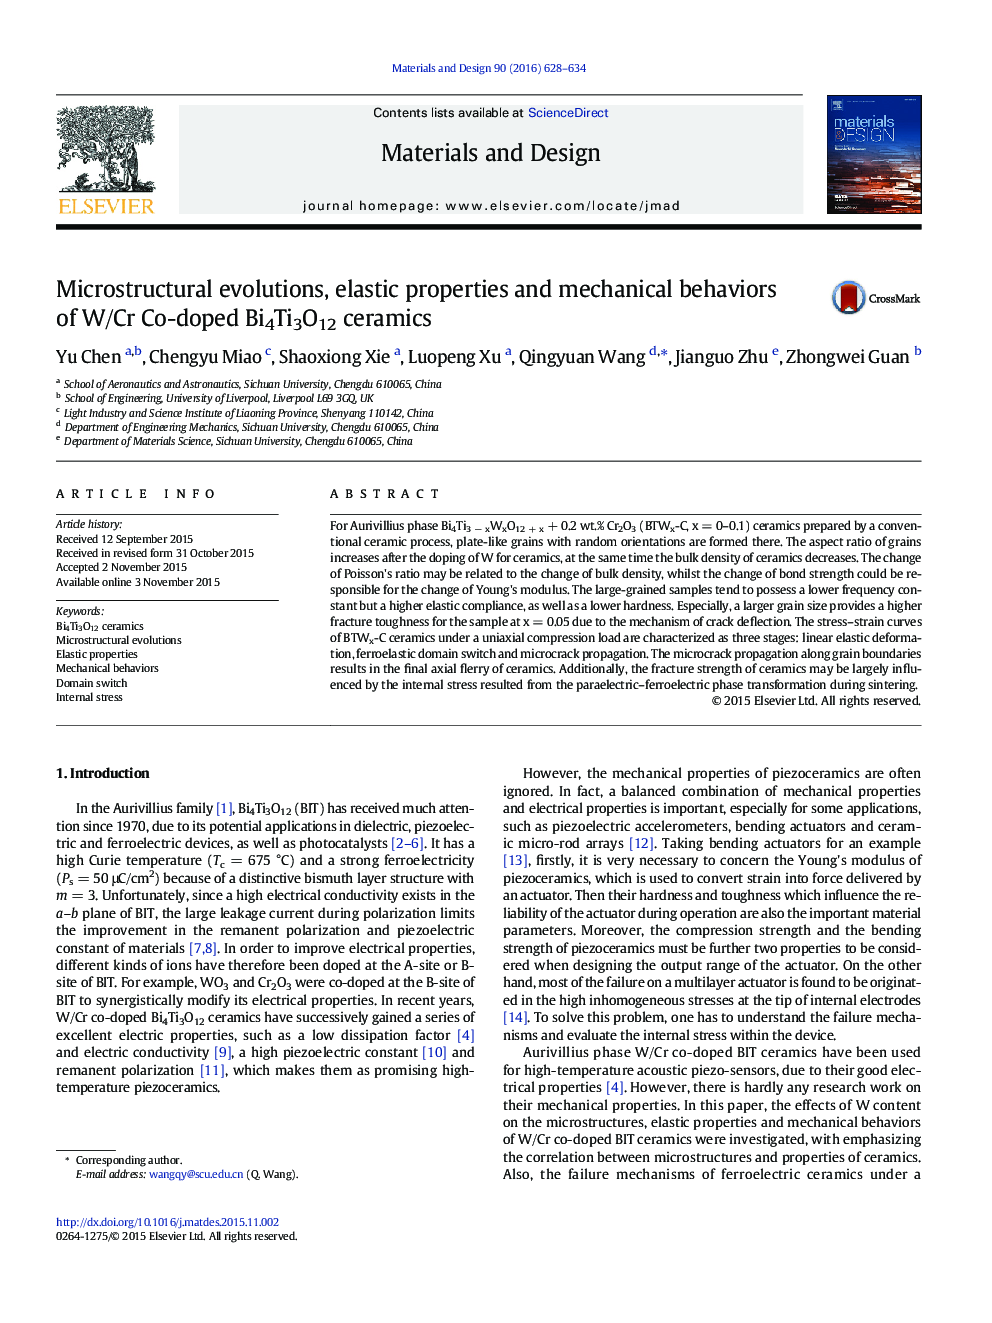 Microstructural evolutions, elastic properties and mechanical behaviors of W/Cr Co-doped Bi4Ti3O12 ceramics